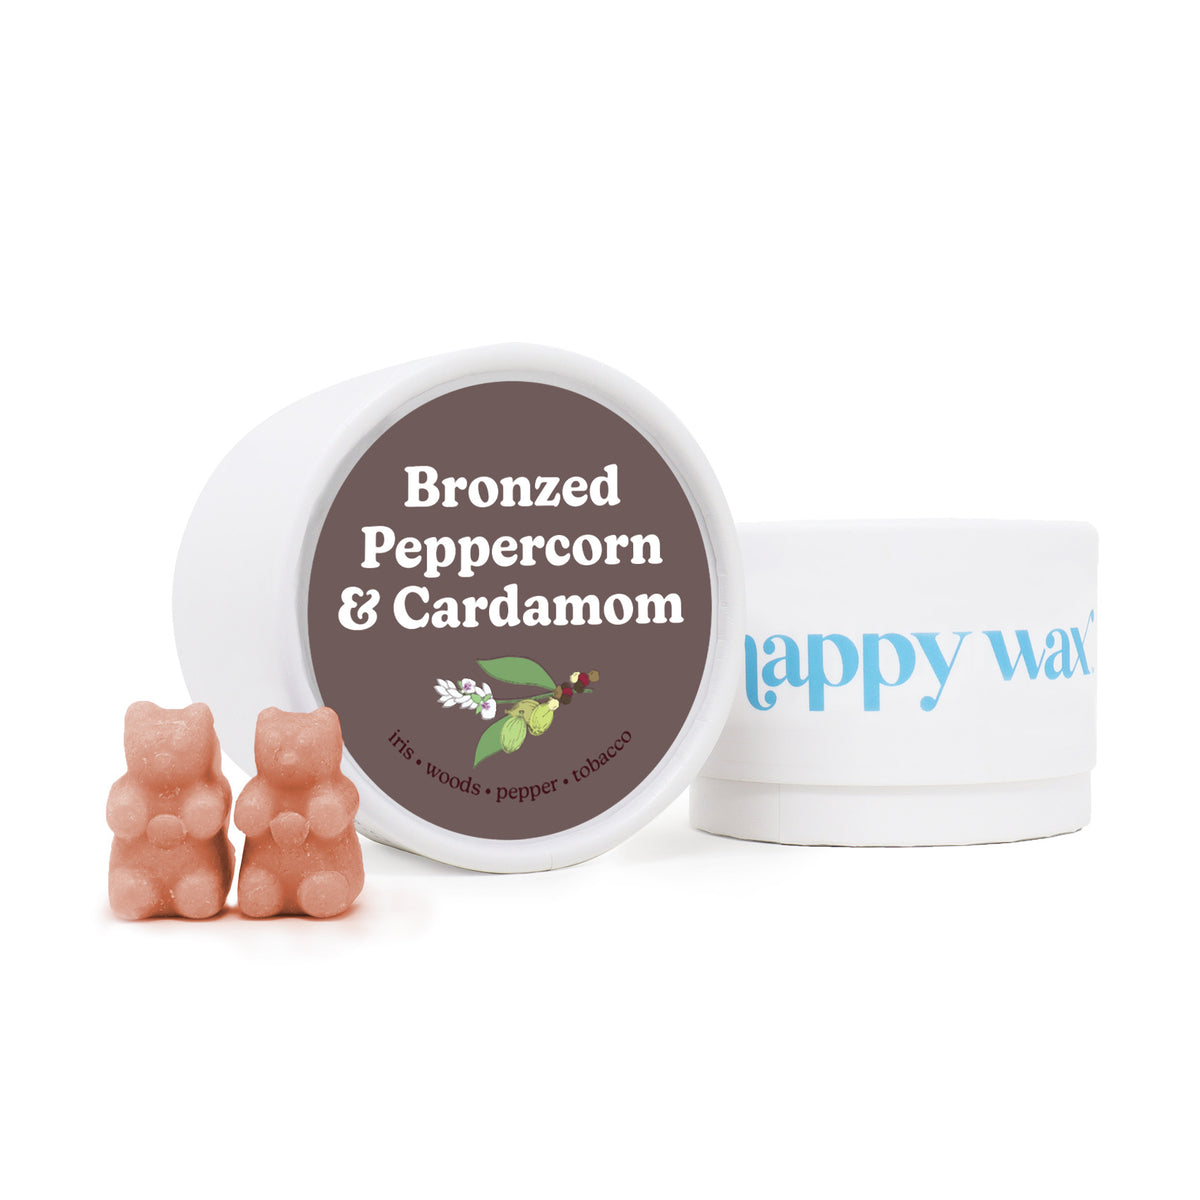 Bronzed Peppercorn & Cardamom Wax Melts